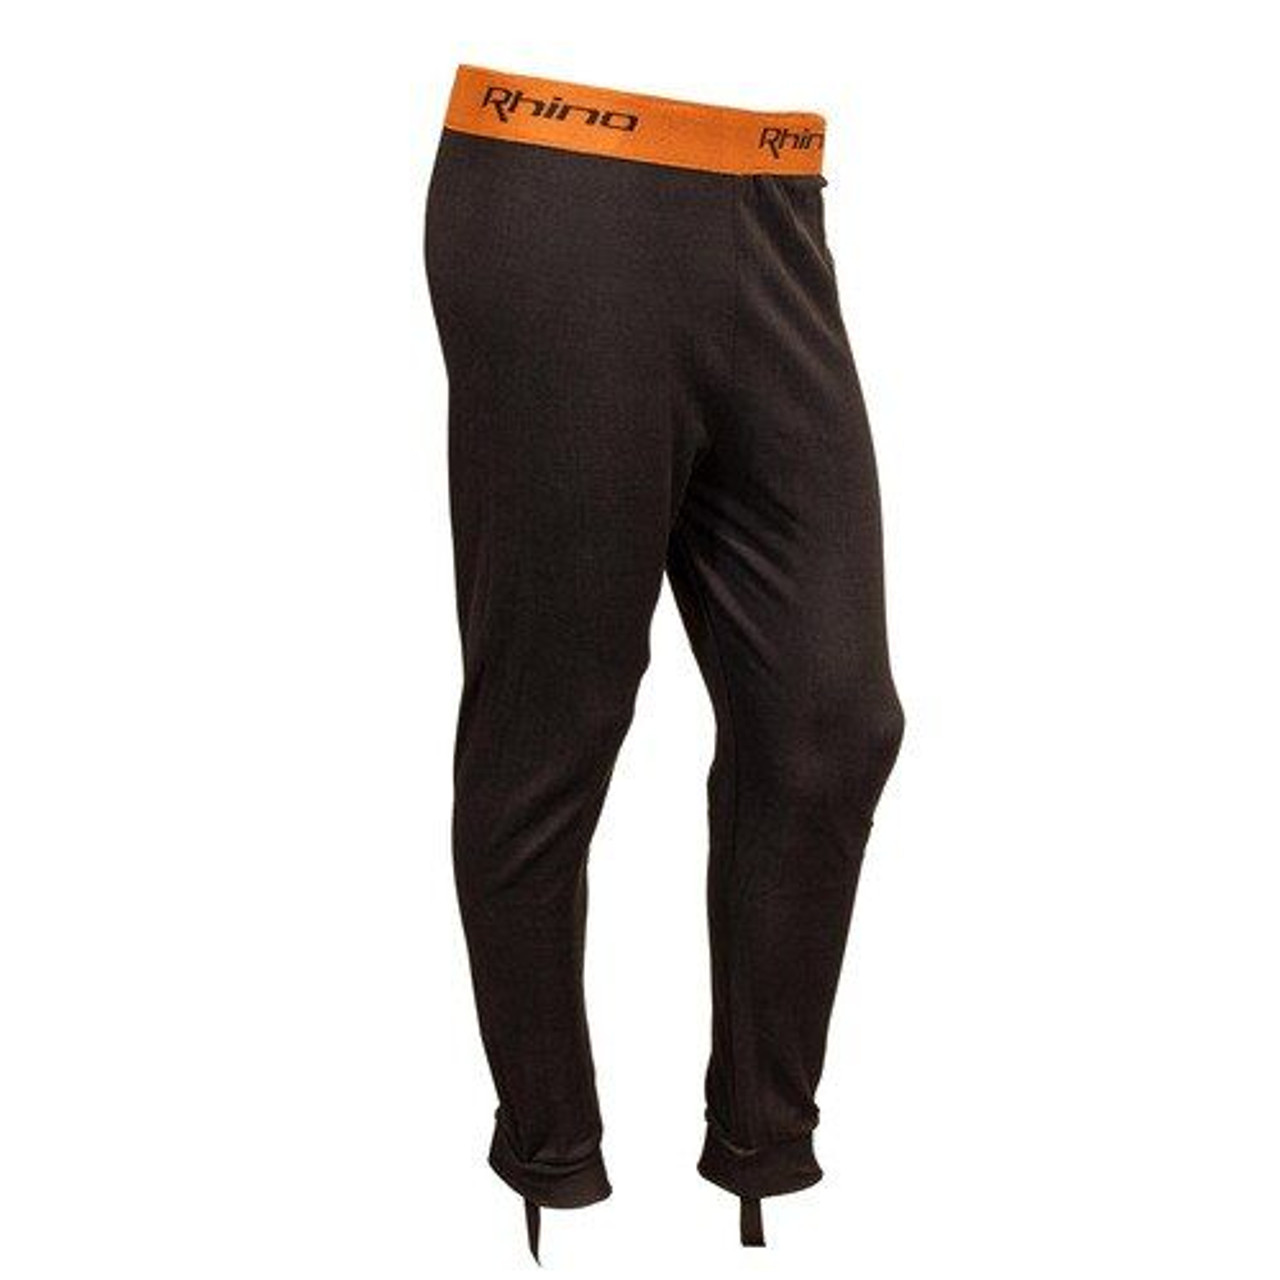 Pants made with DuPont ƒ?› Kevlar ?? fiber, Motorcycle Leggings